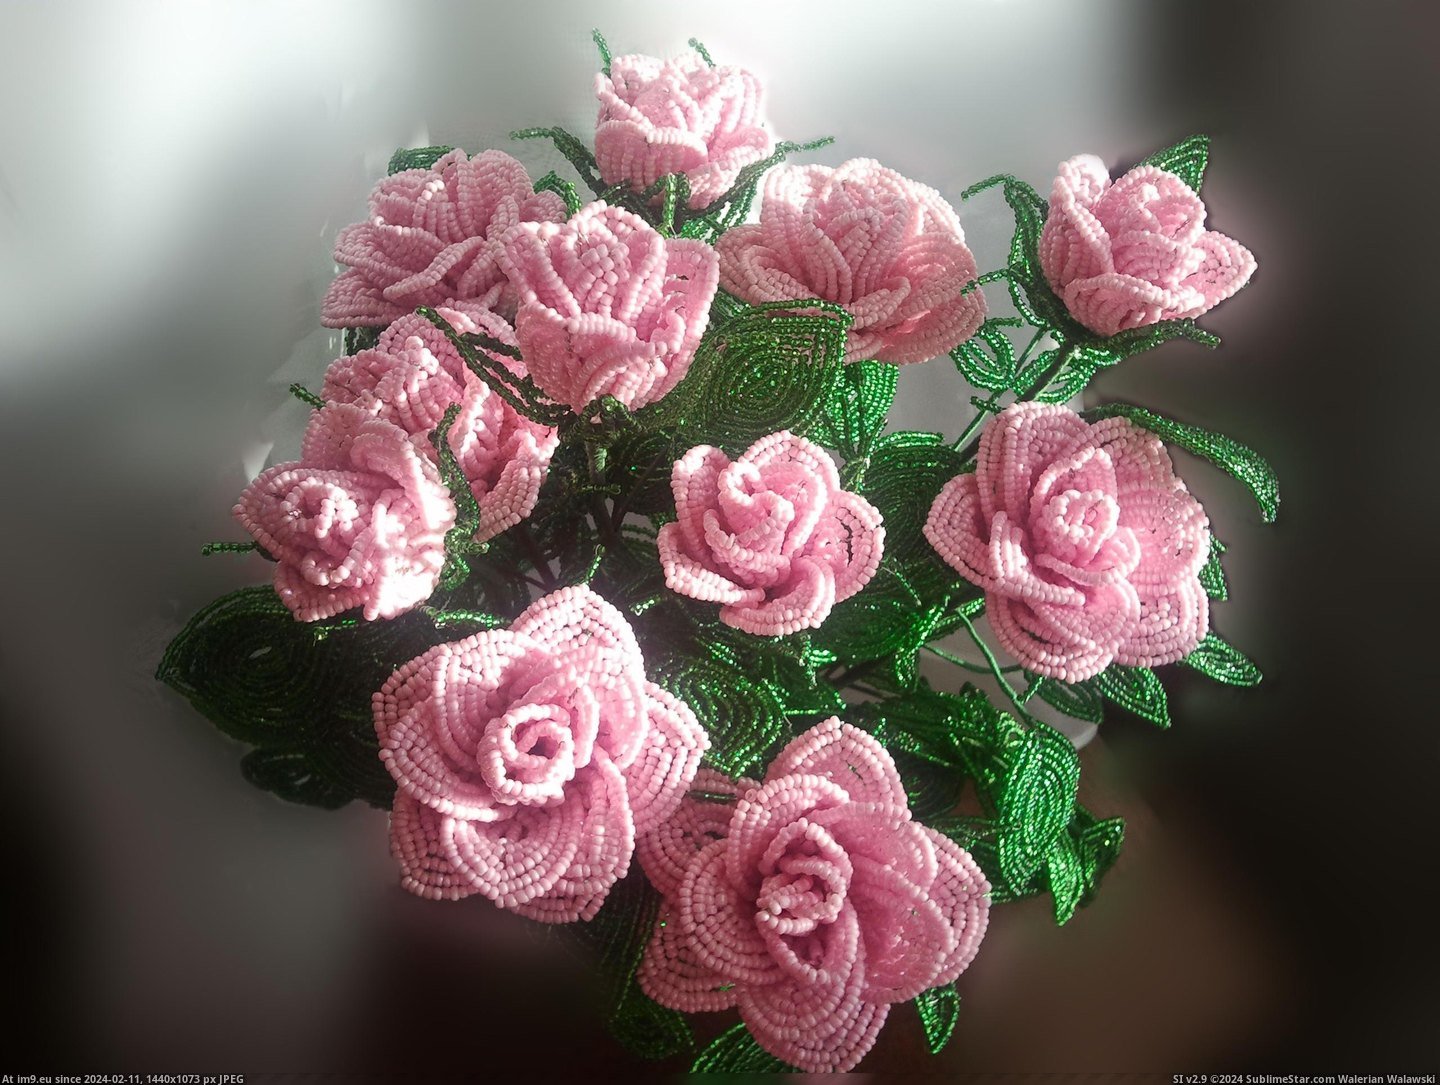 #Pink #Flowers #Bead #Roses #Craft Bead craft - flowers, pink roses Pic. (Изображение из альбом Random images))